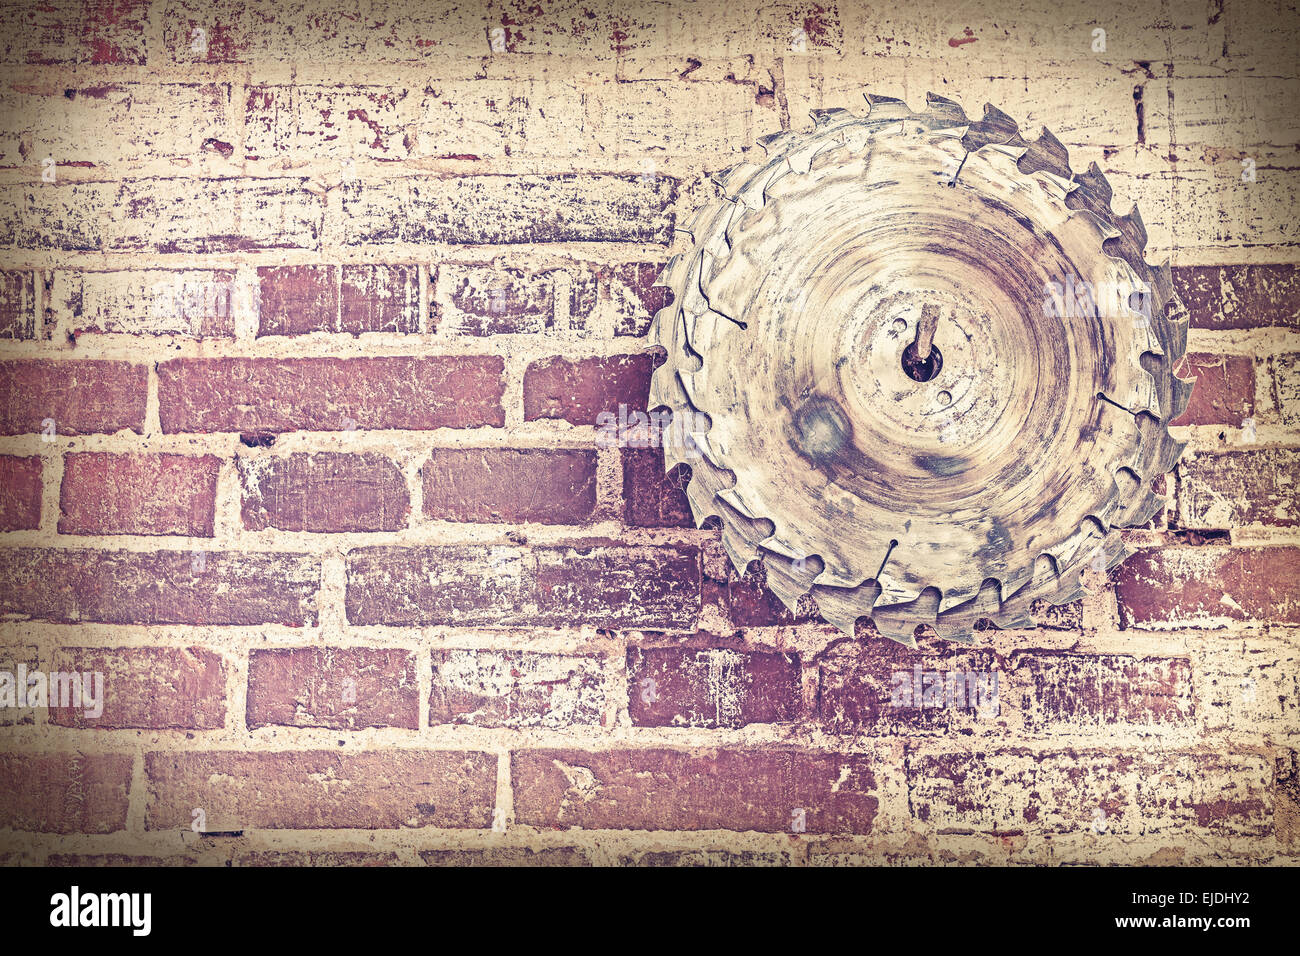 Retro style circular saw blade on a grungy brick wall. Stock Photo